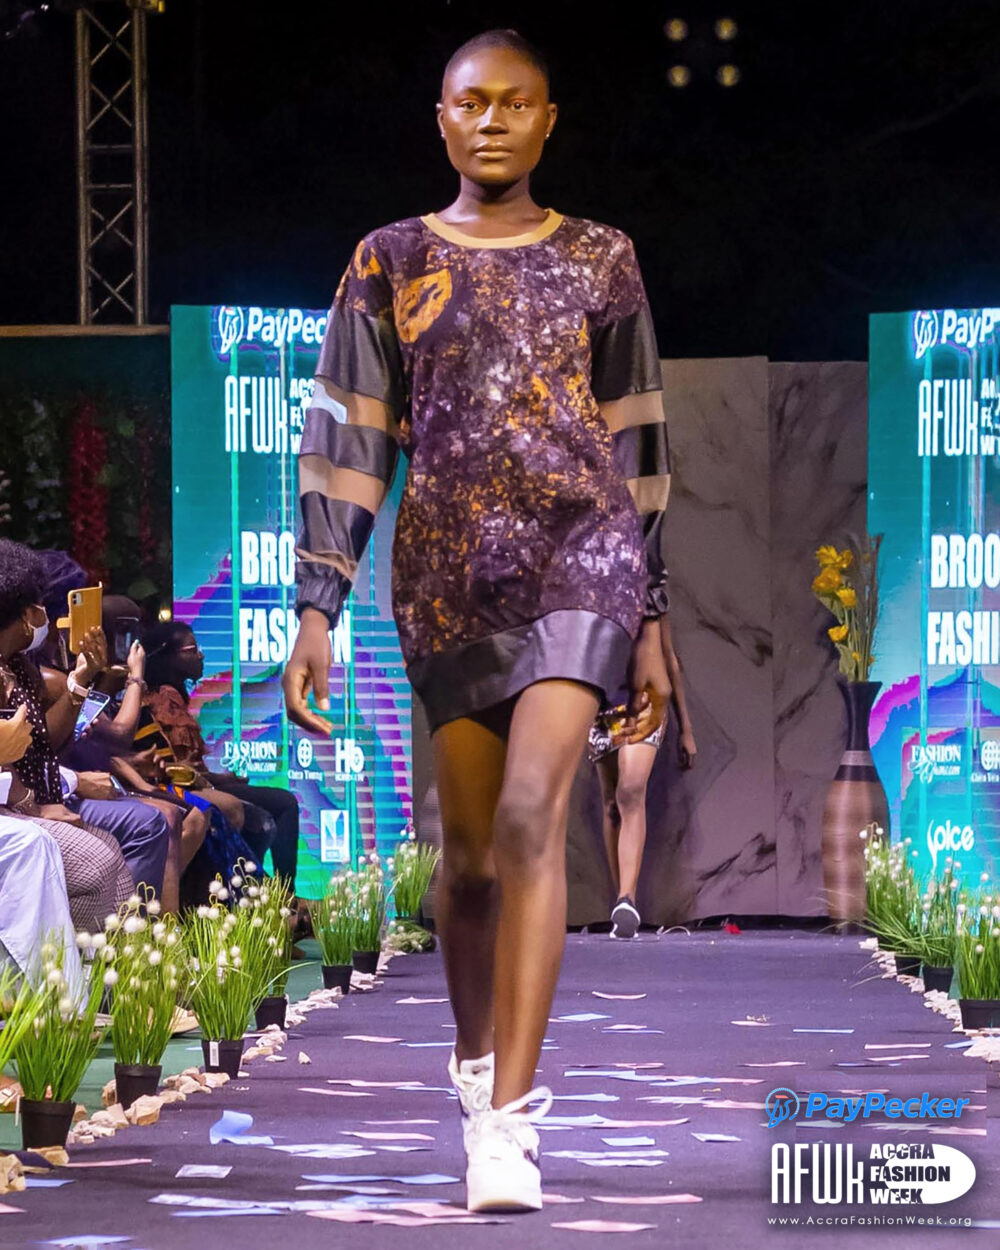 Broots Fashion @ Accra Fashion Week 2021 - Accra Fashion Week | Ghana's ...